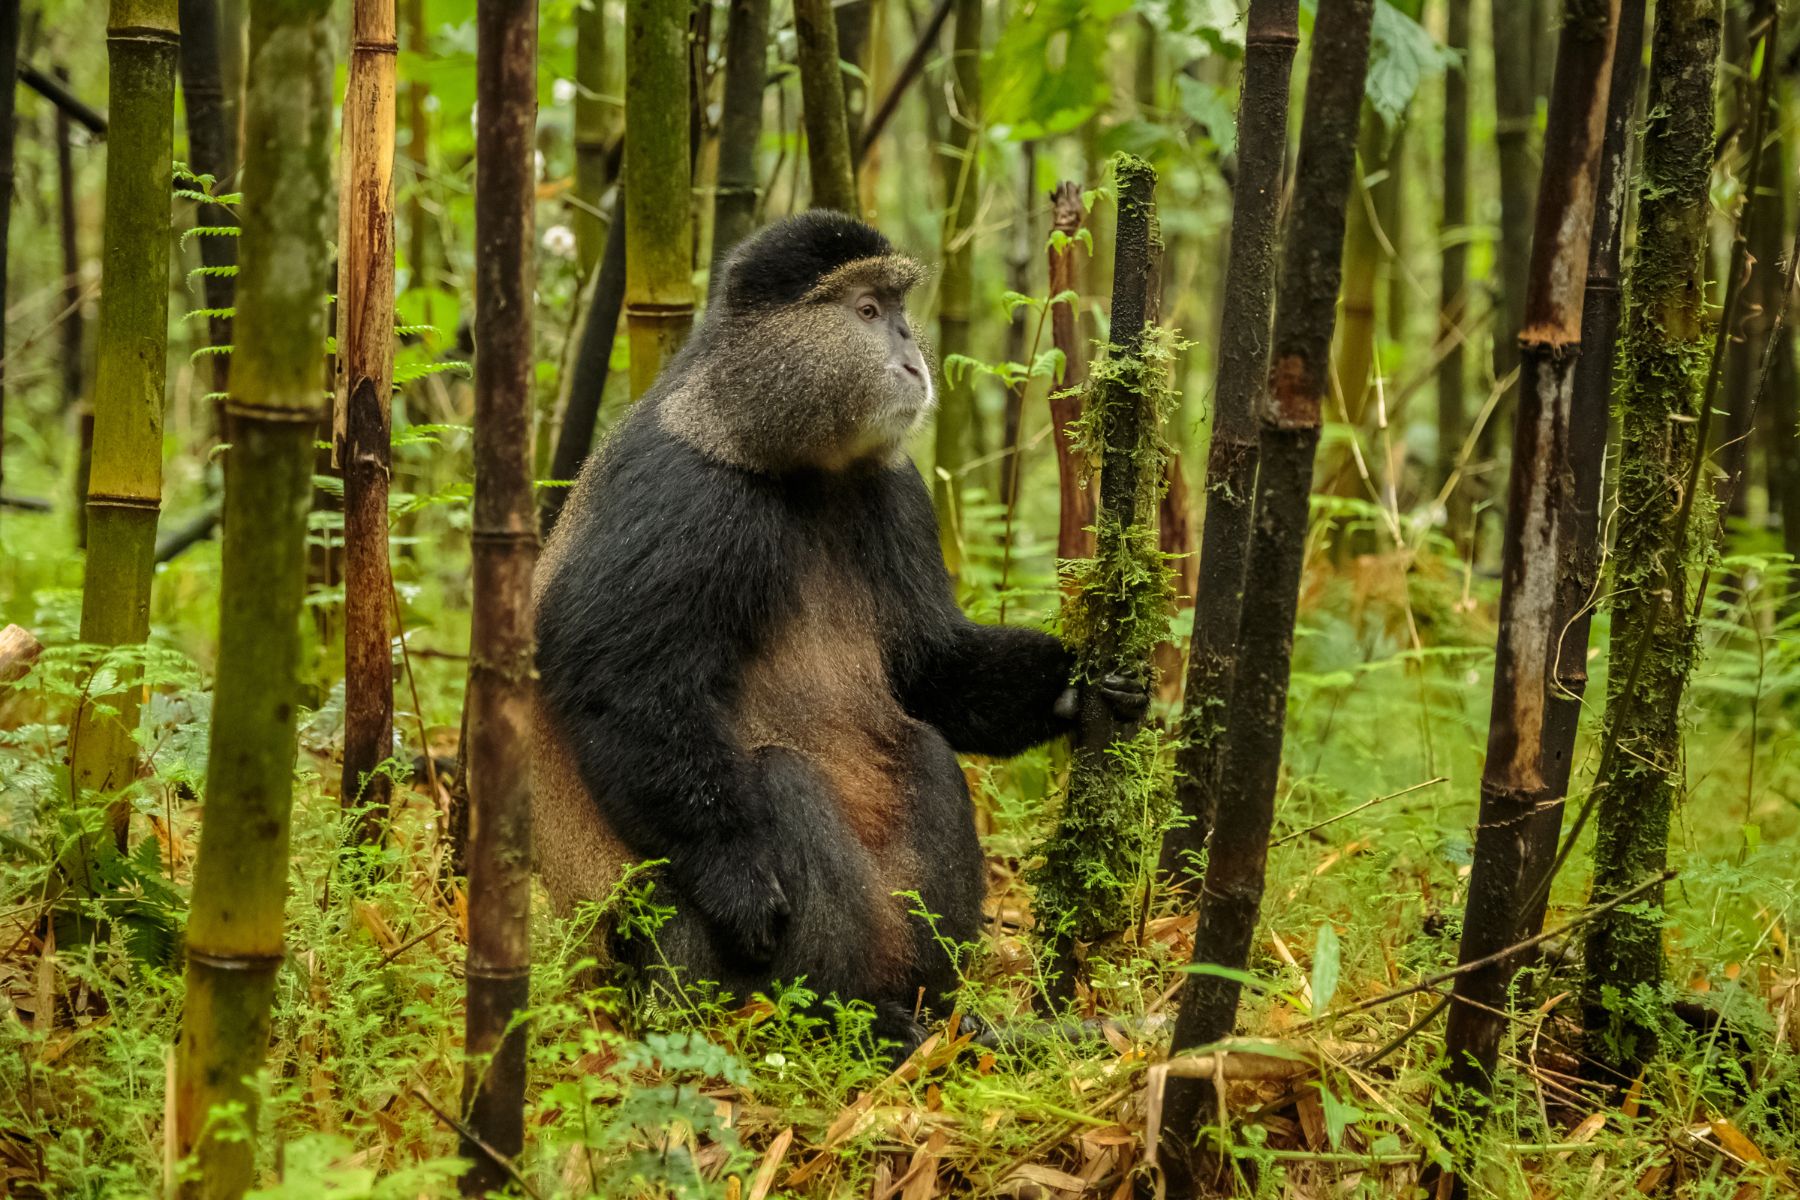 Photograph of a golden monkey sitting amongst bamboo shoots in Rwanda.